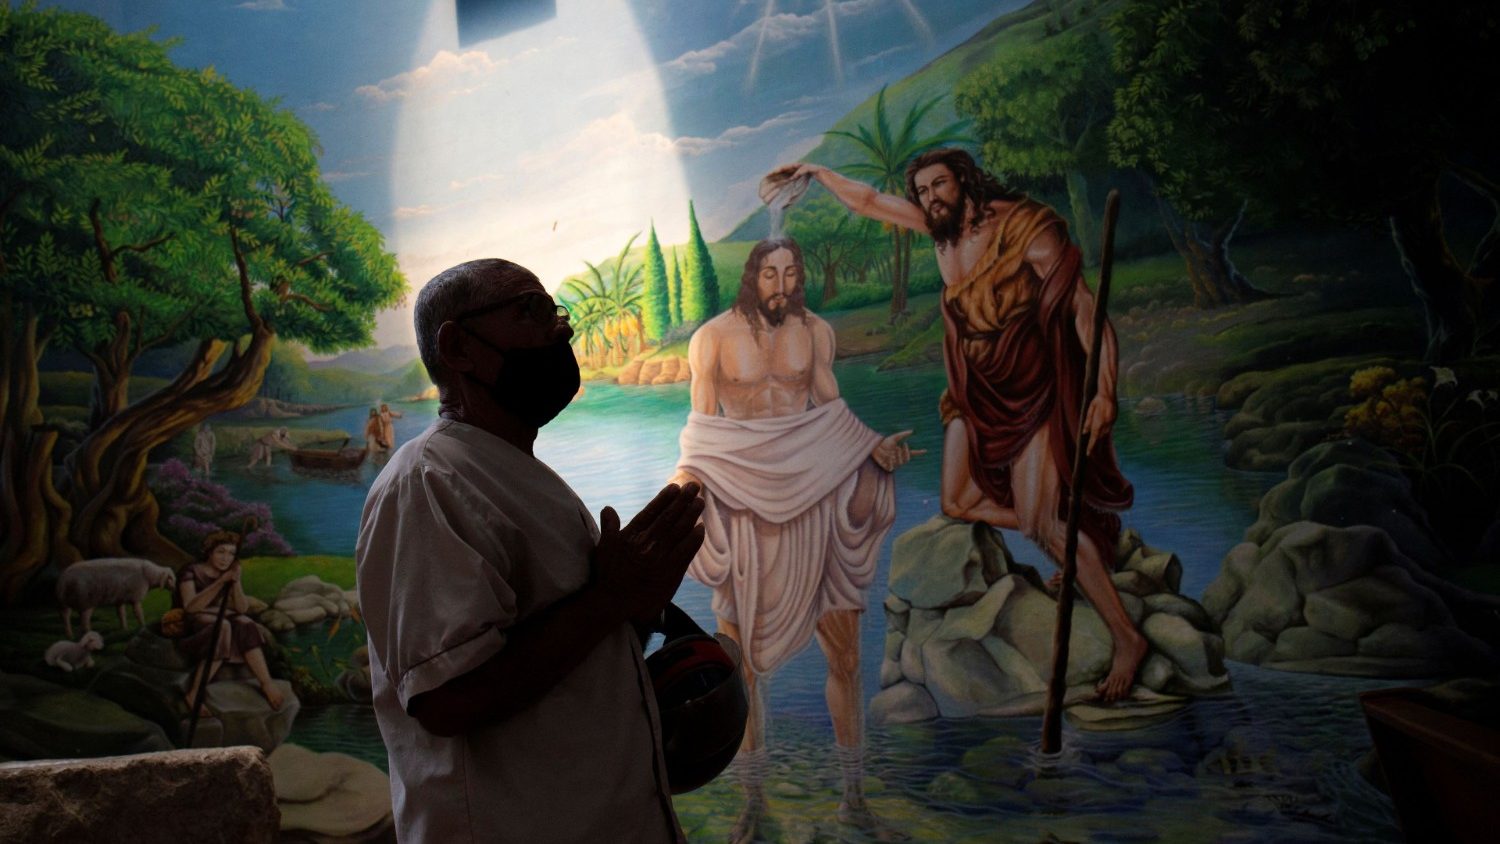 Святейший Престол обеспокоен ситуацией в Никарагуа